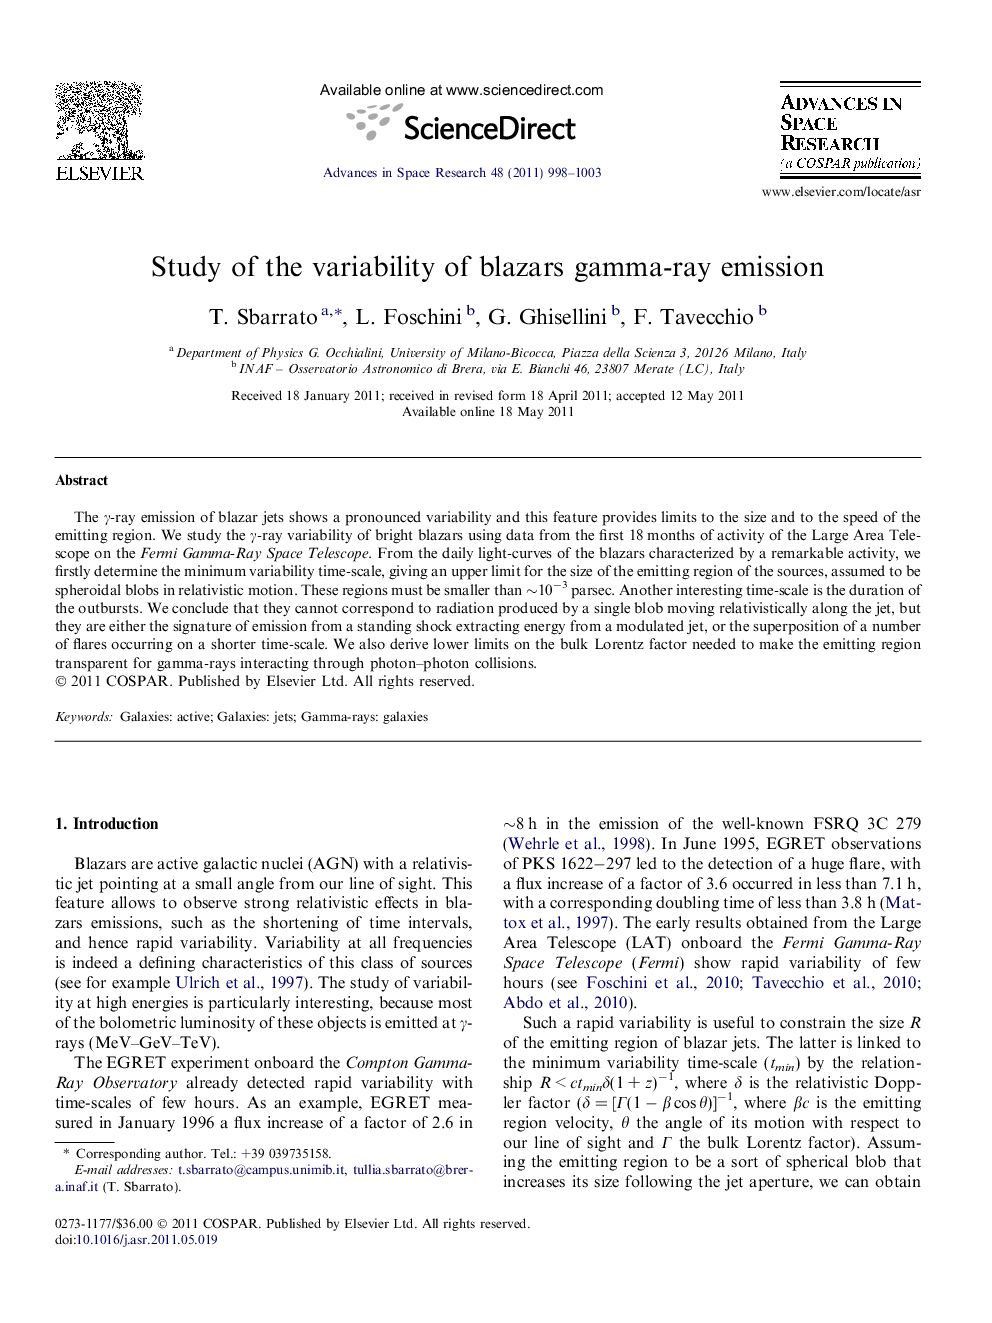 Study of the variability of blazars gamma-ray emission